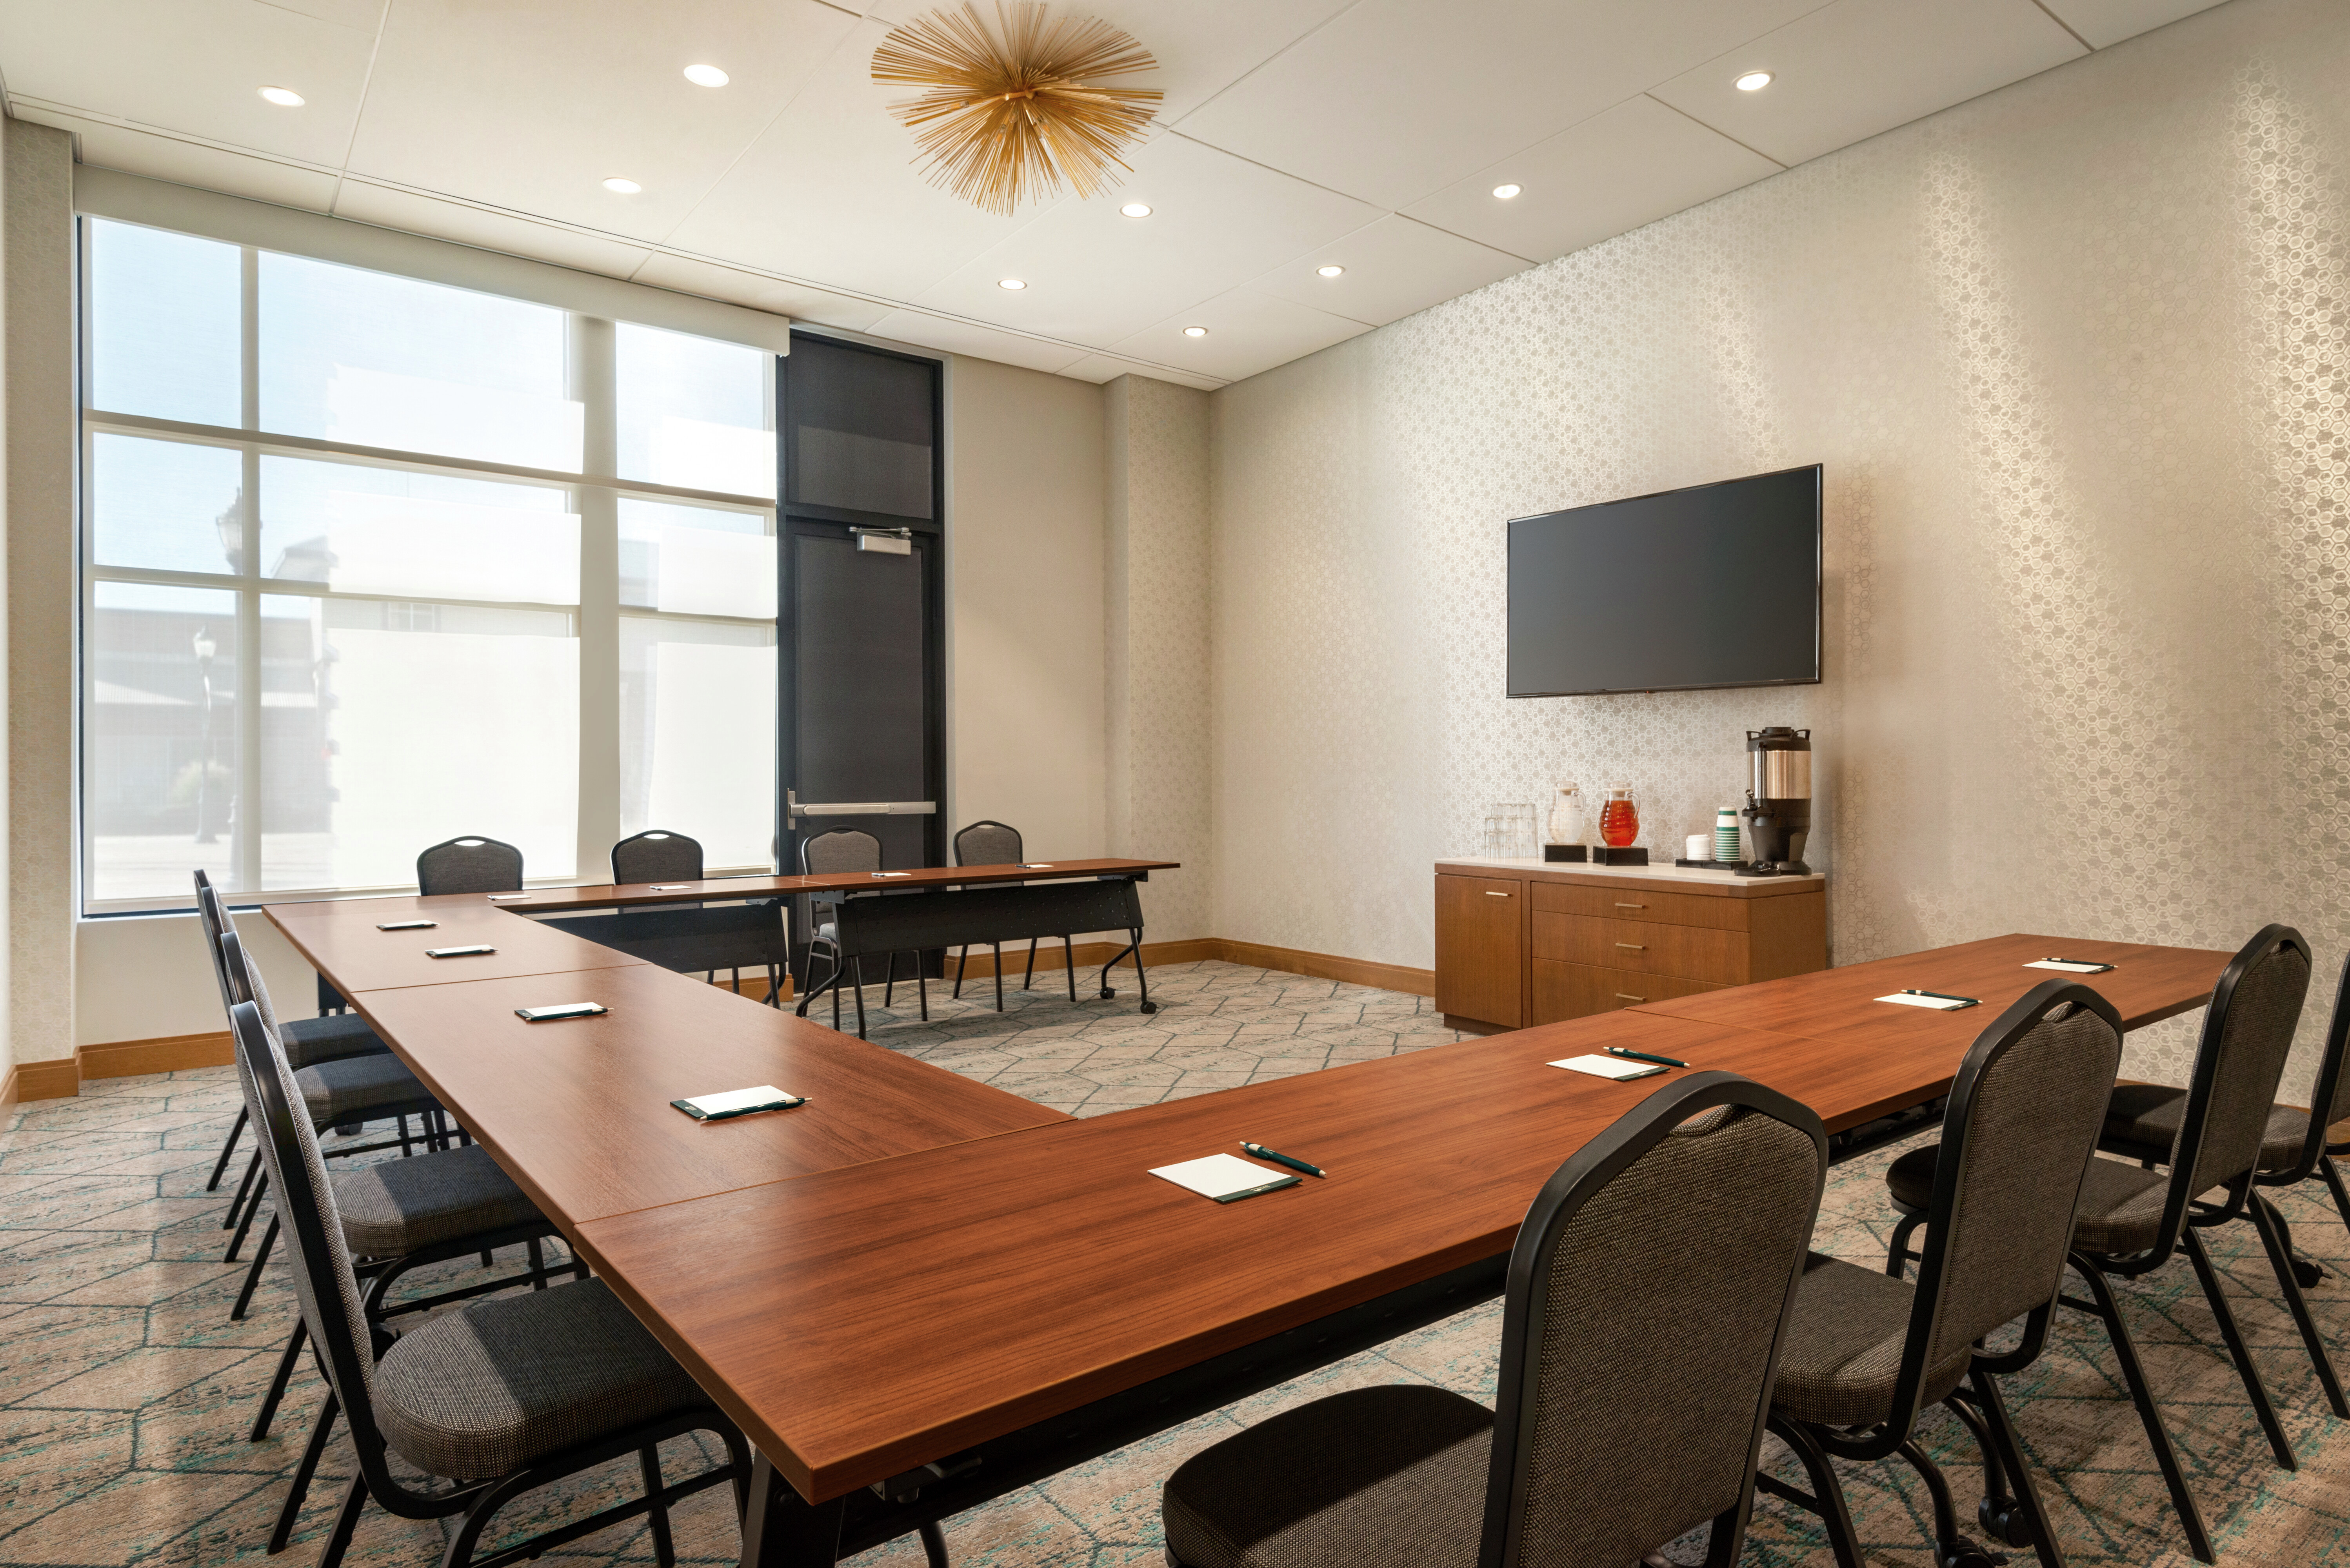 Meeting Room With U-Shape